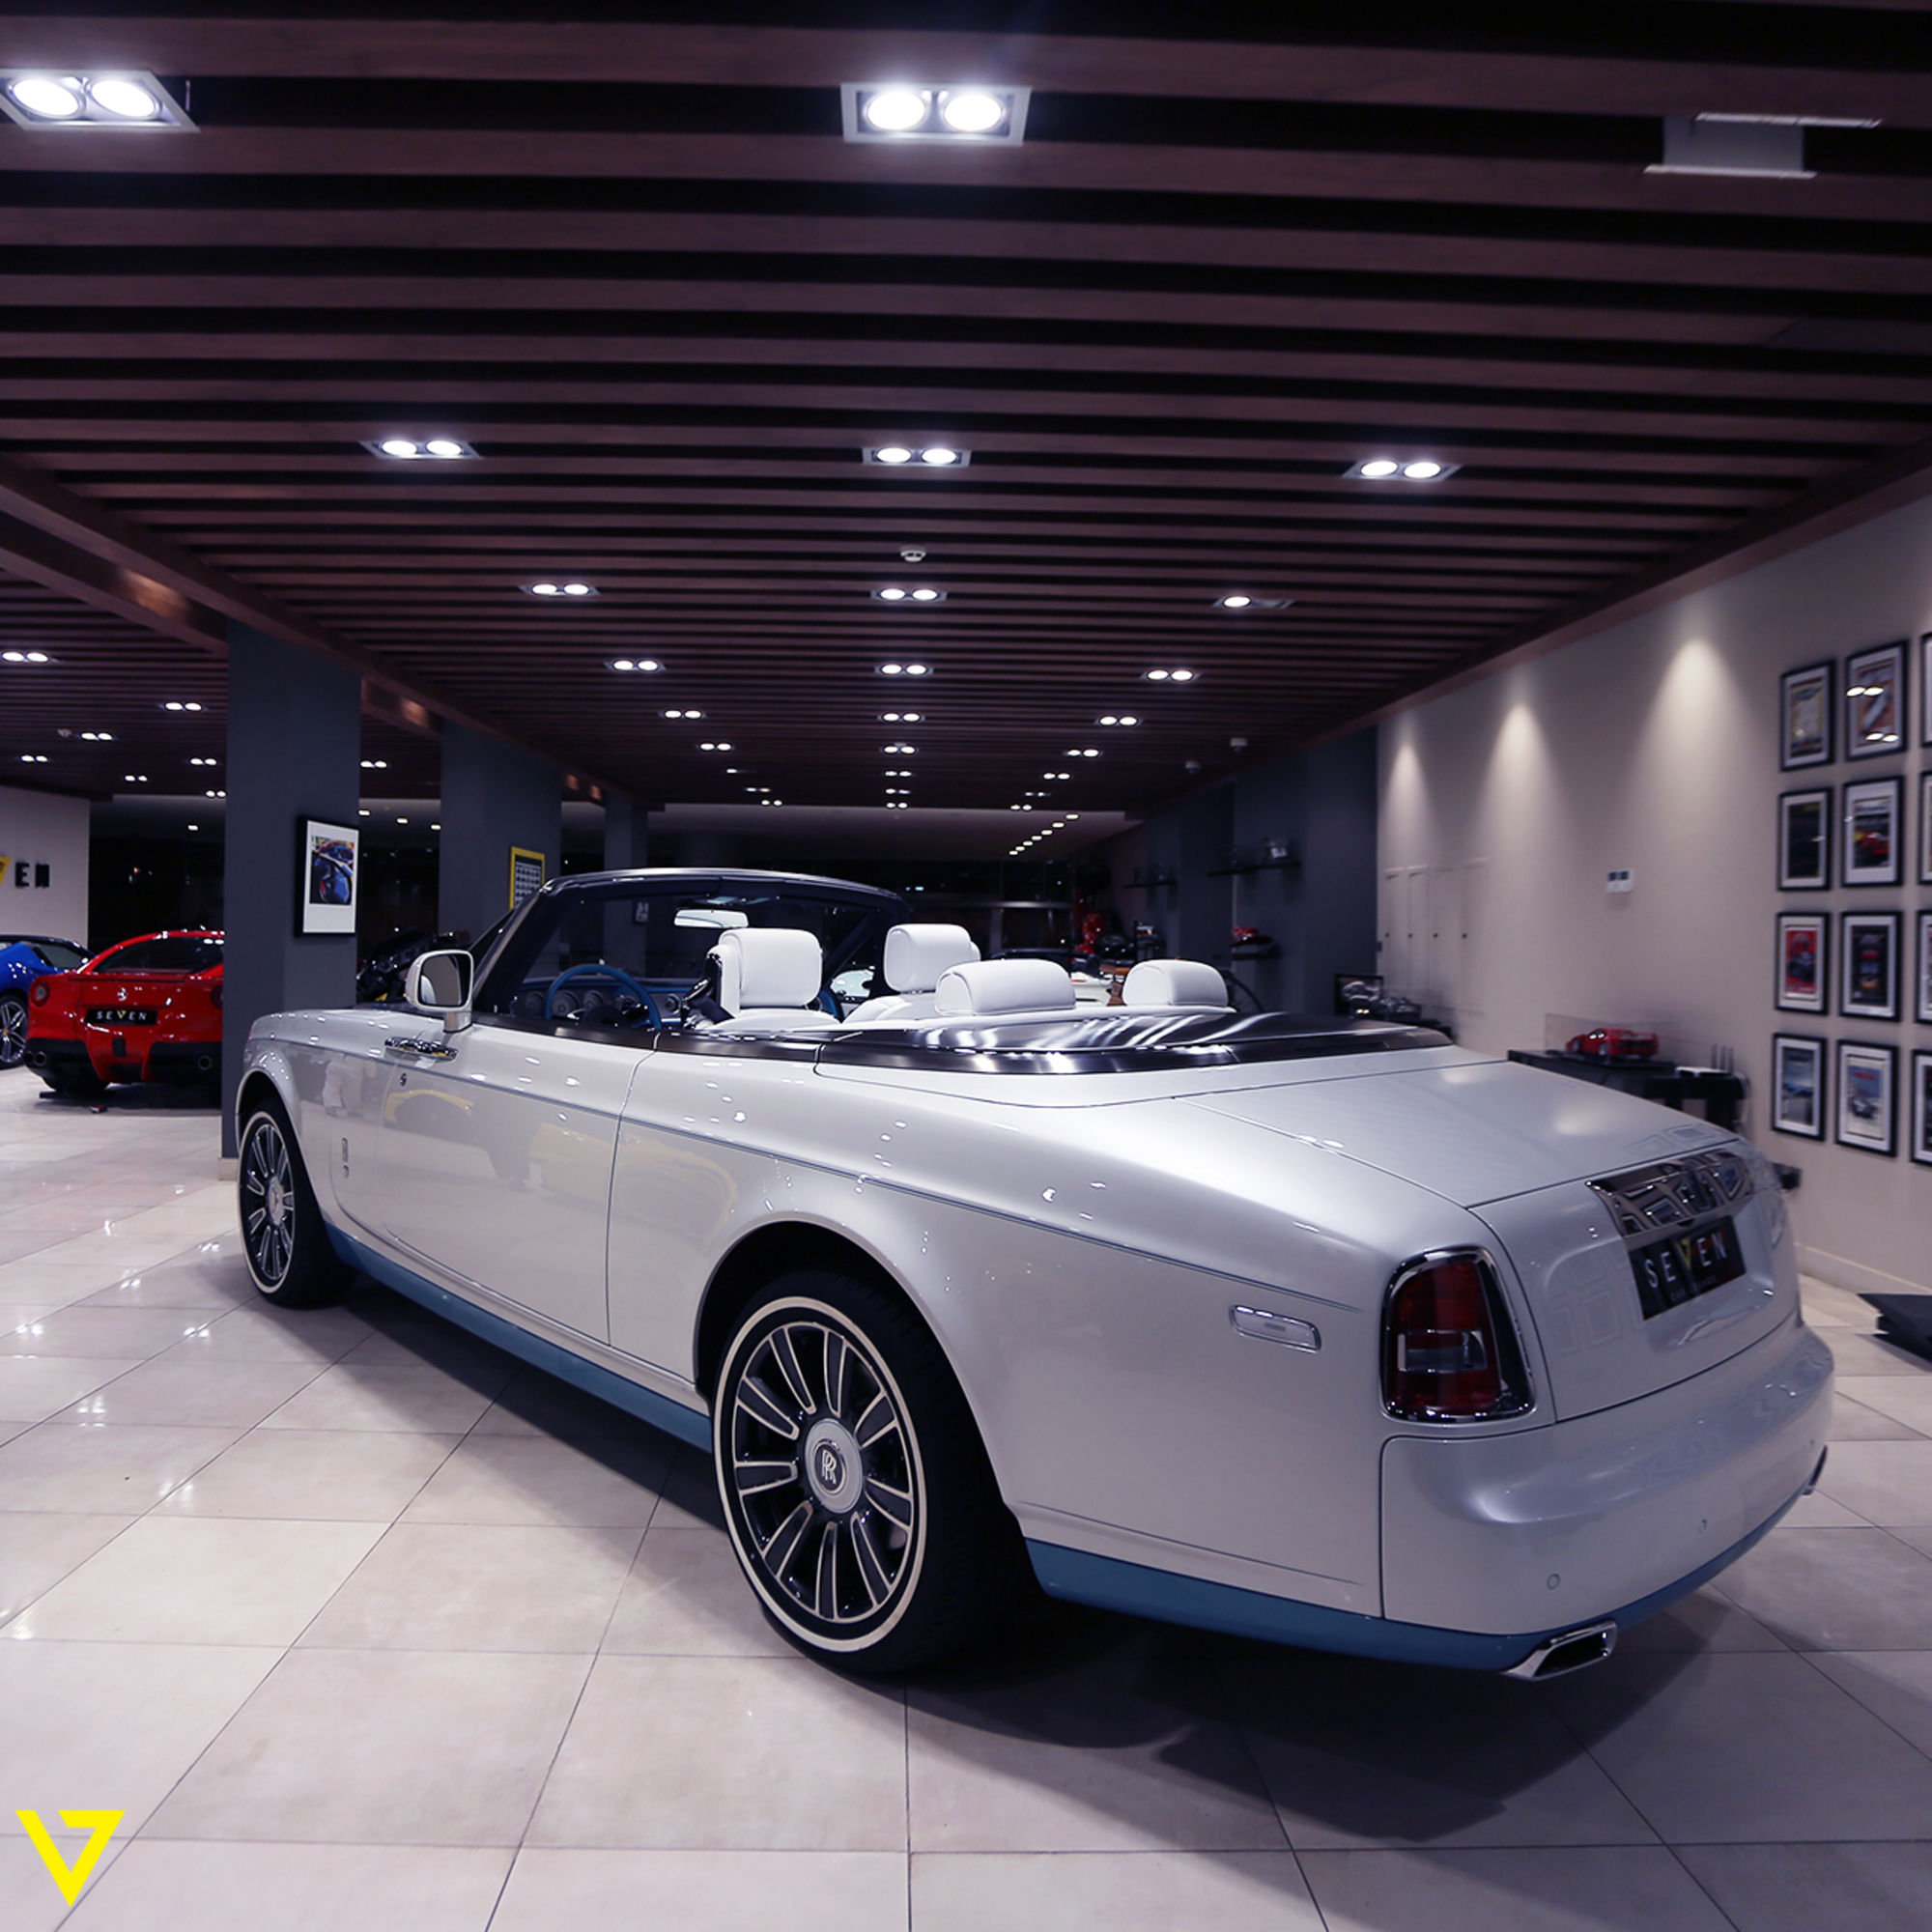 Rolls Royce Phantom Drophead Coupe "Last of Last"